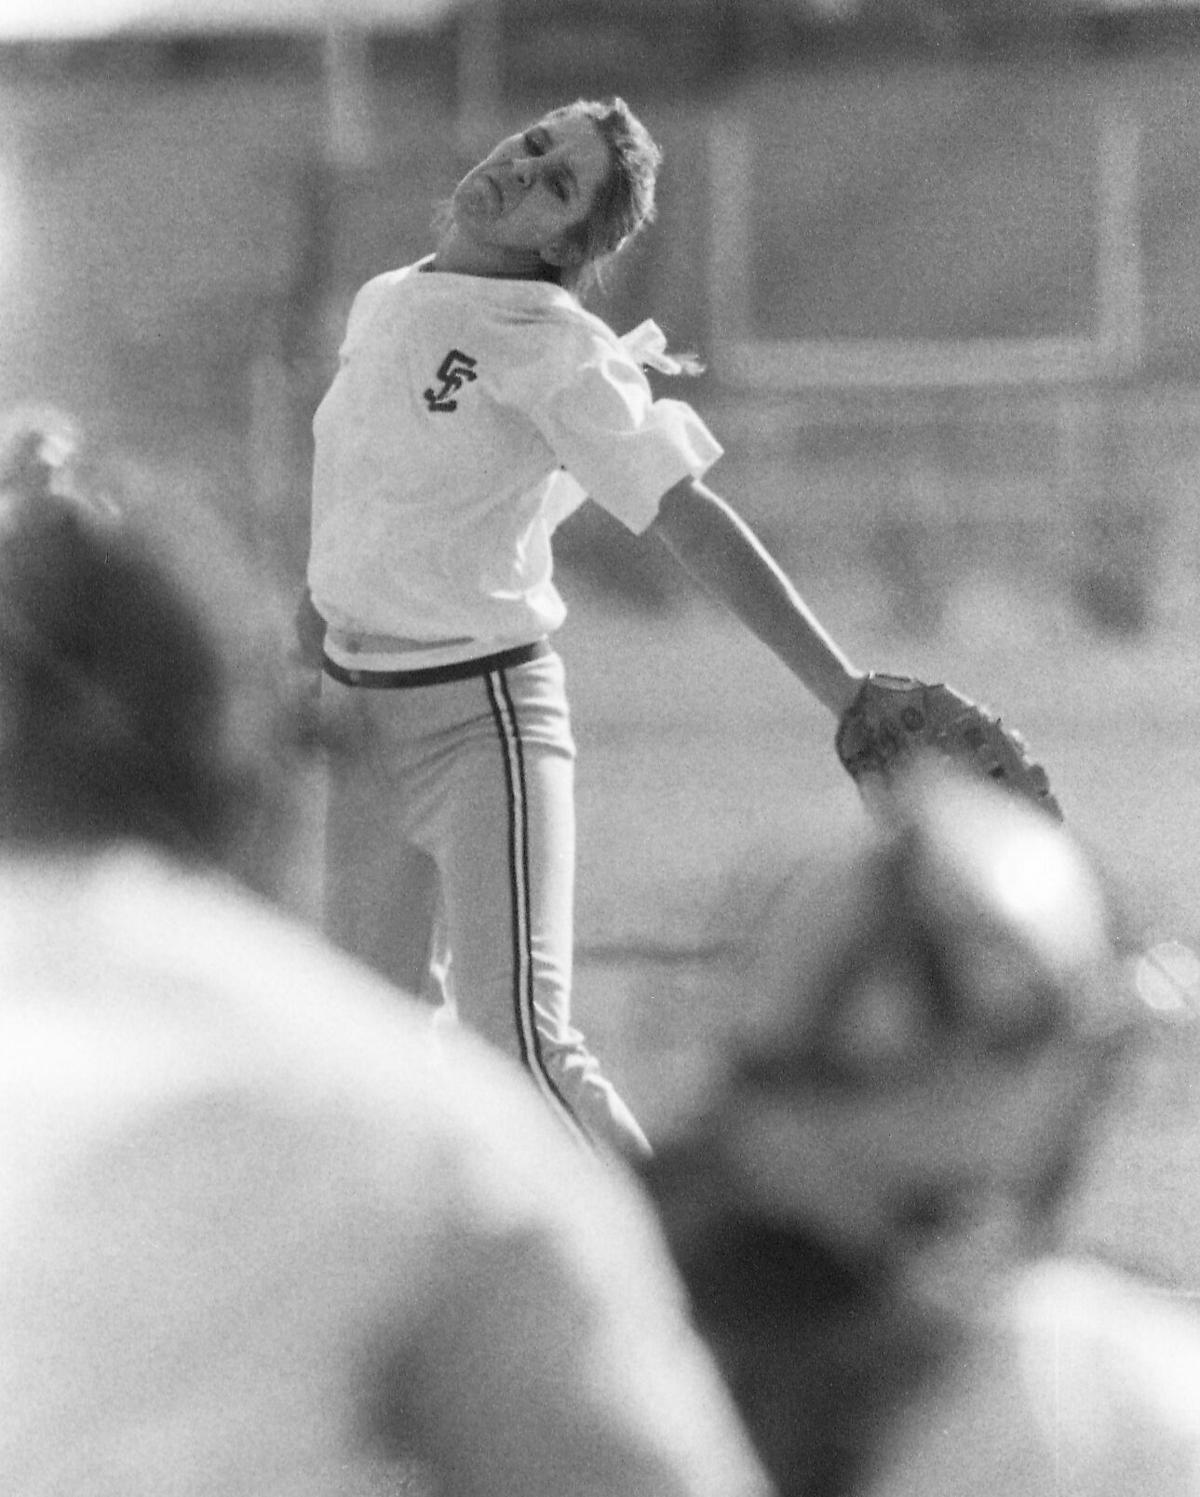 Kurt Russell recalls playing baseball in El Paso